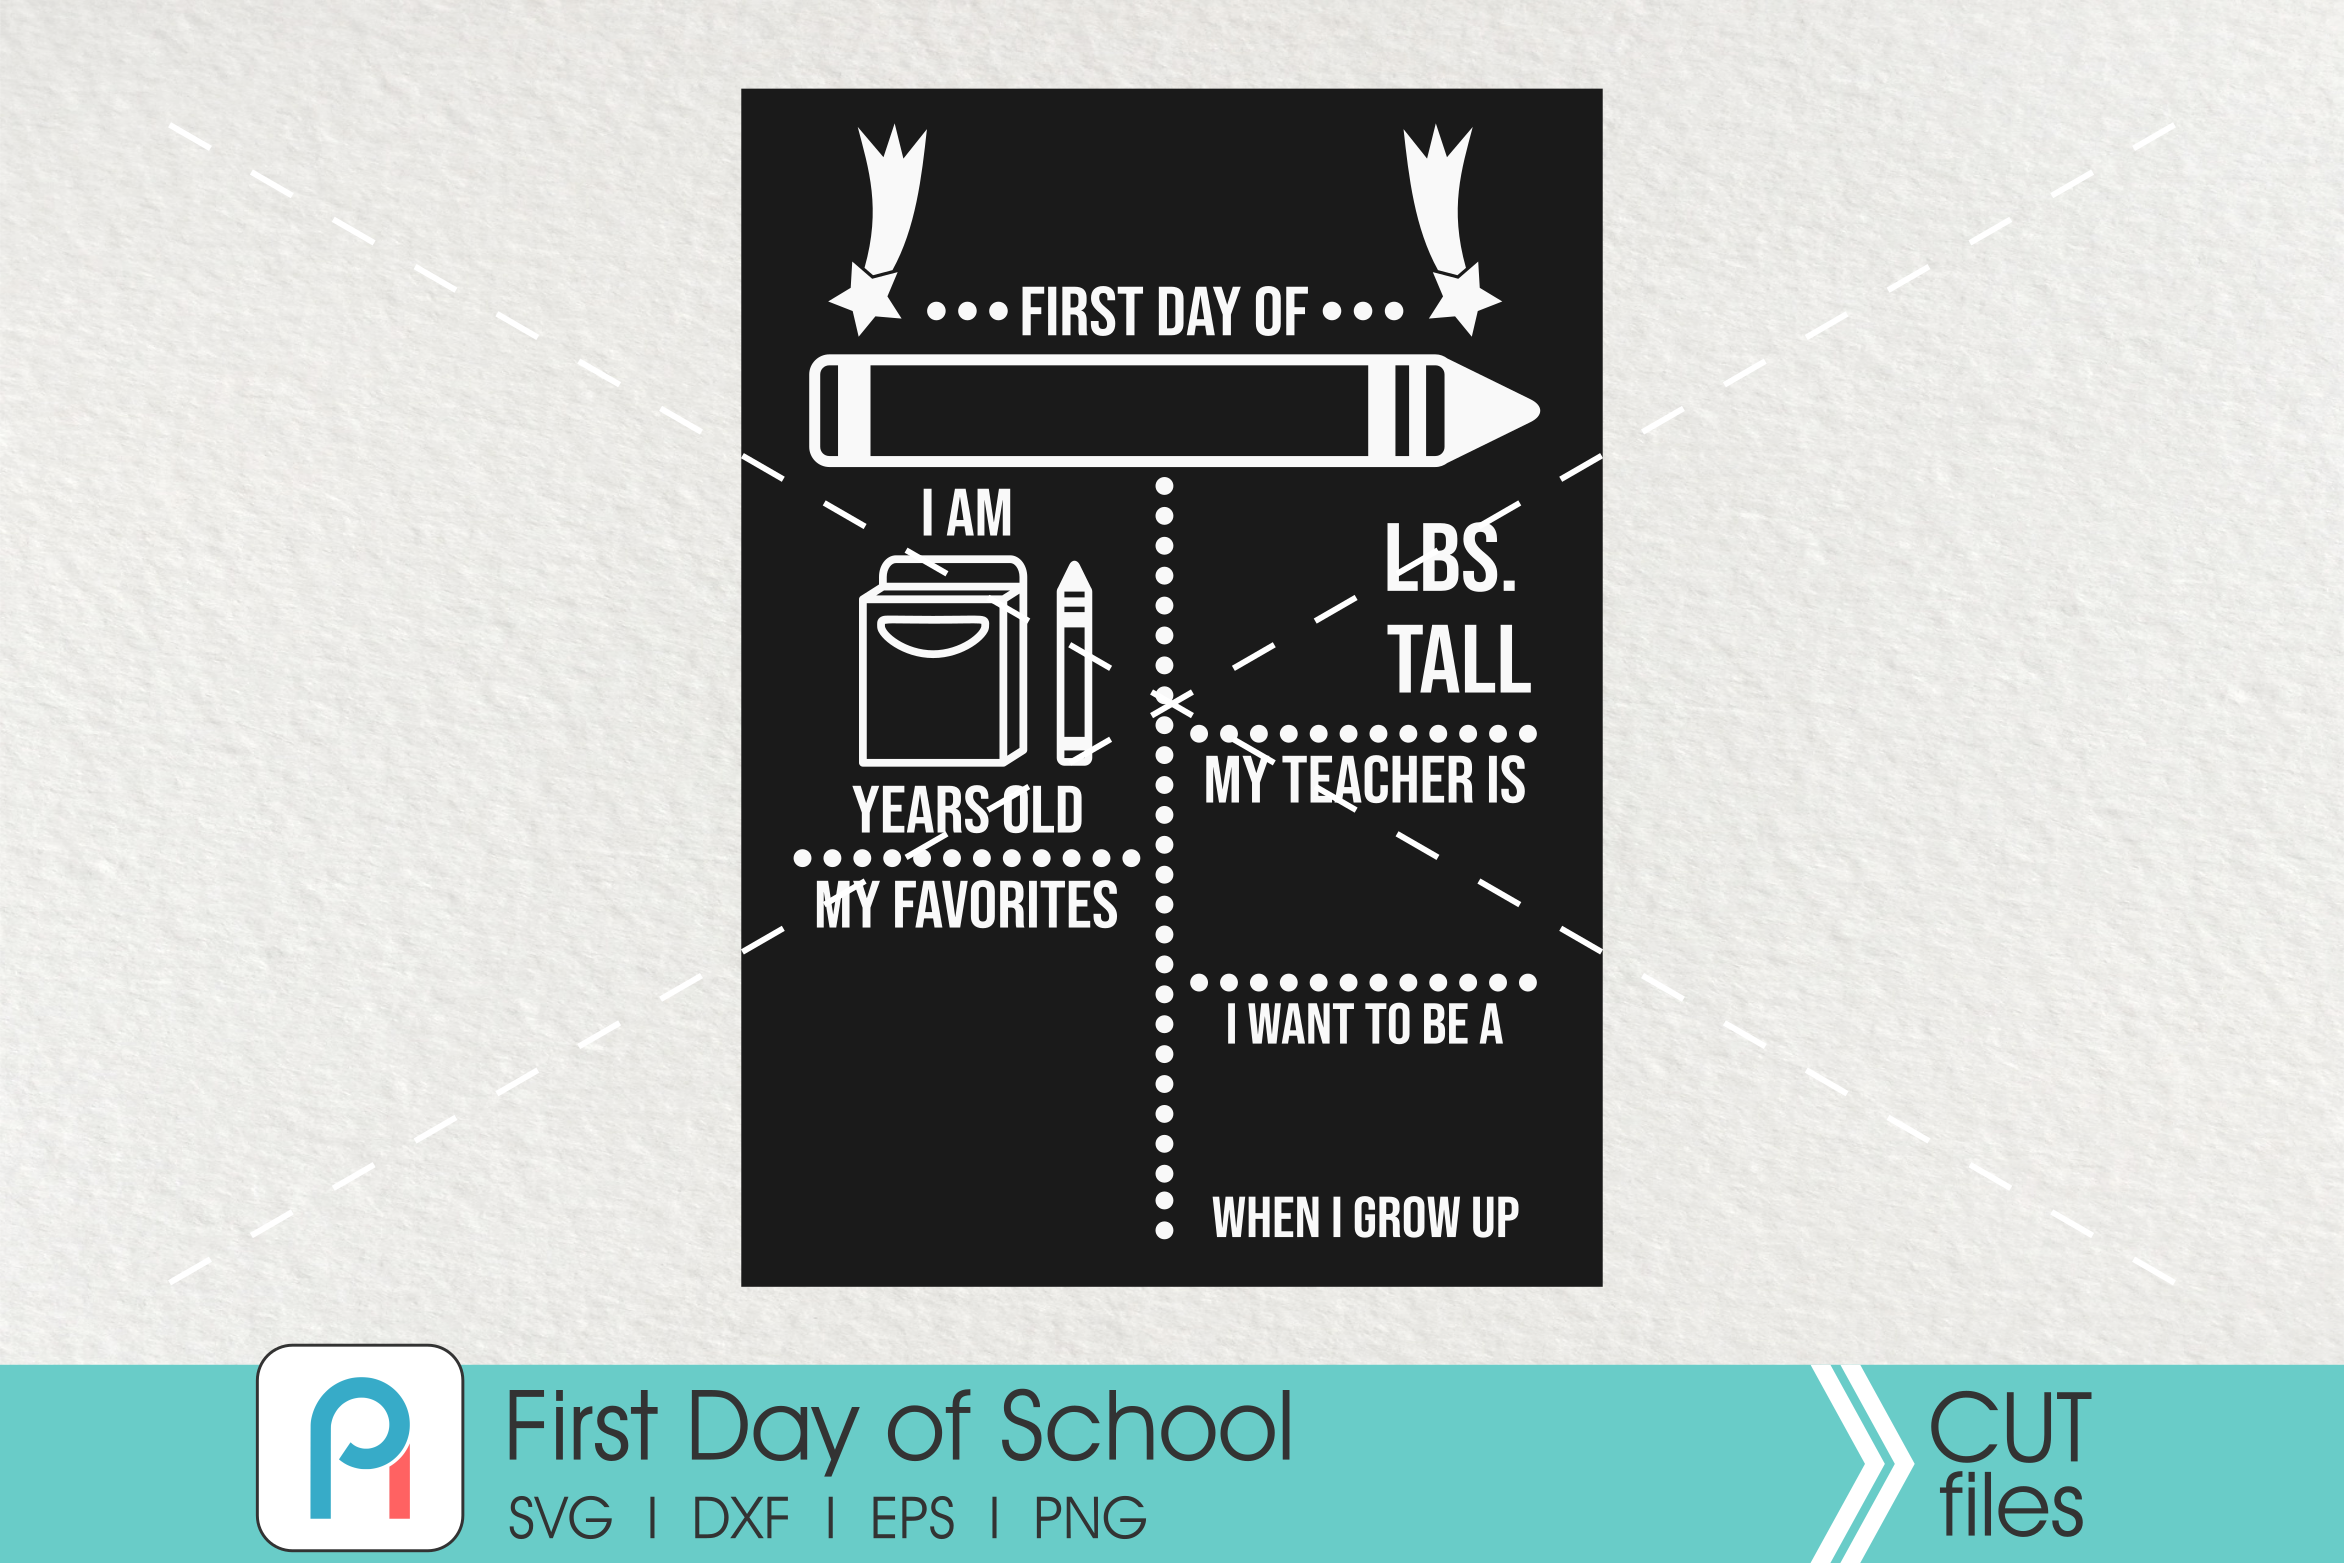 First Day Of School, Board, School Year, Cut File, SVG, DXF